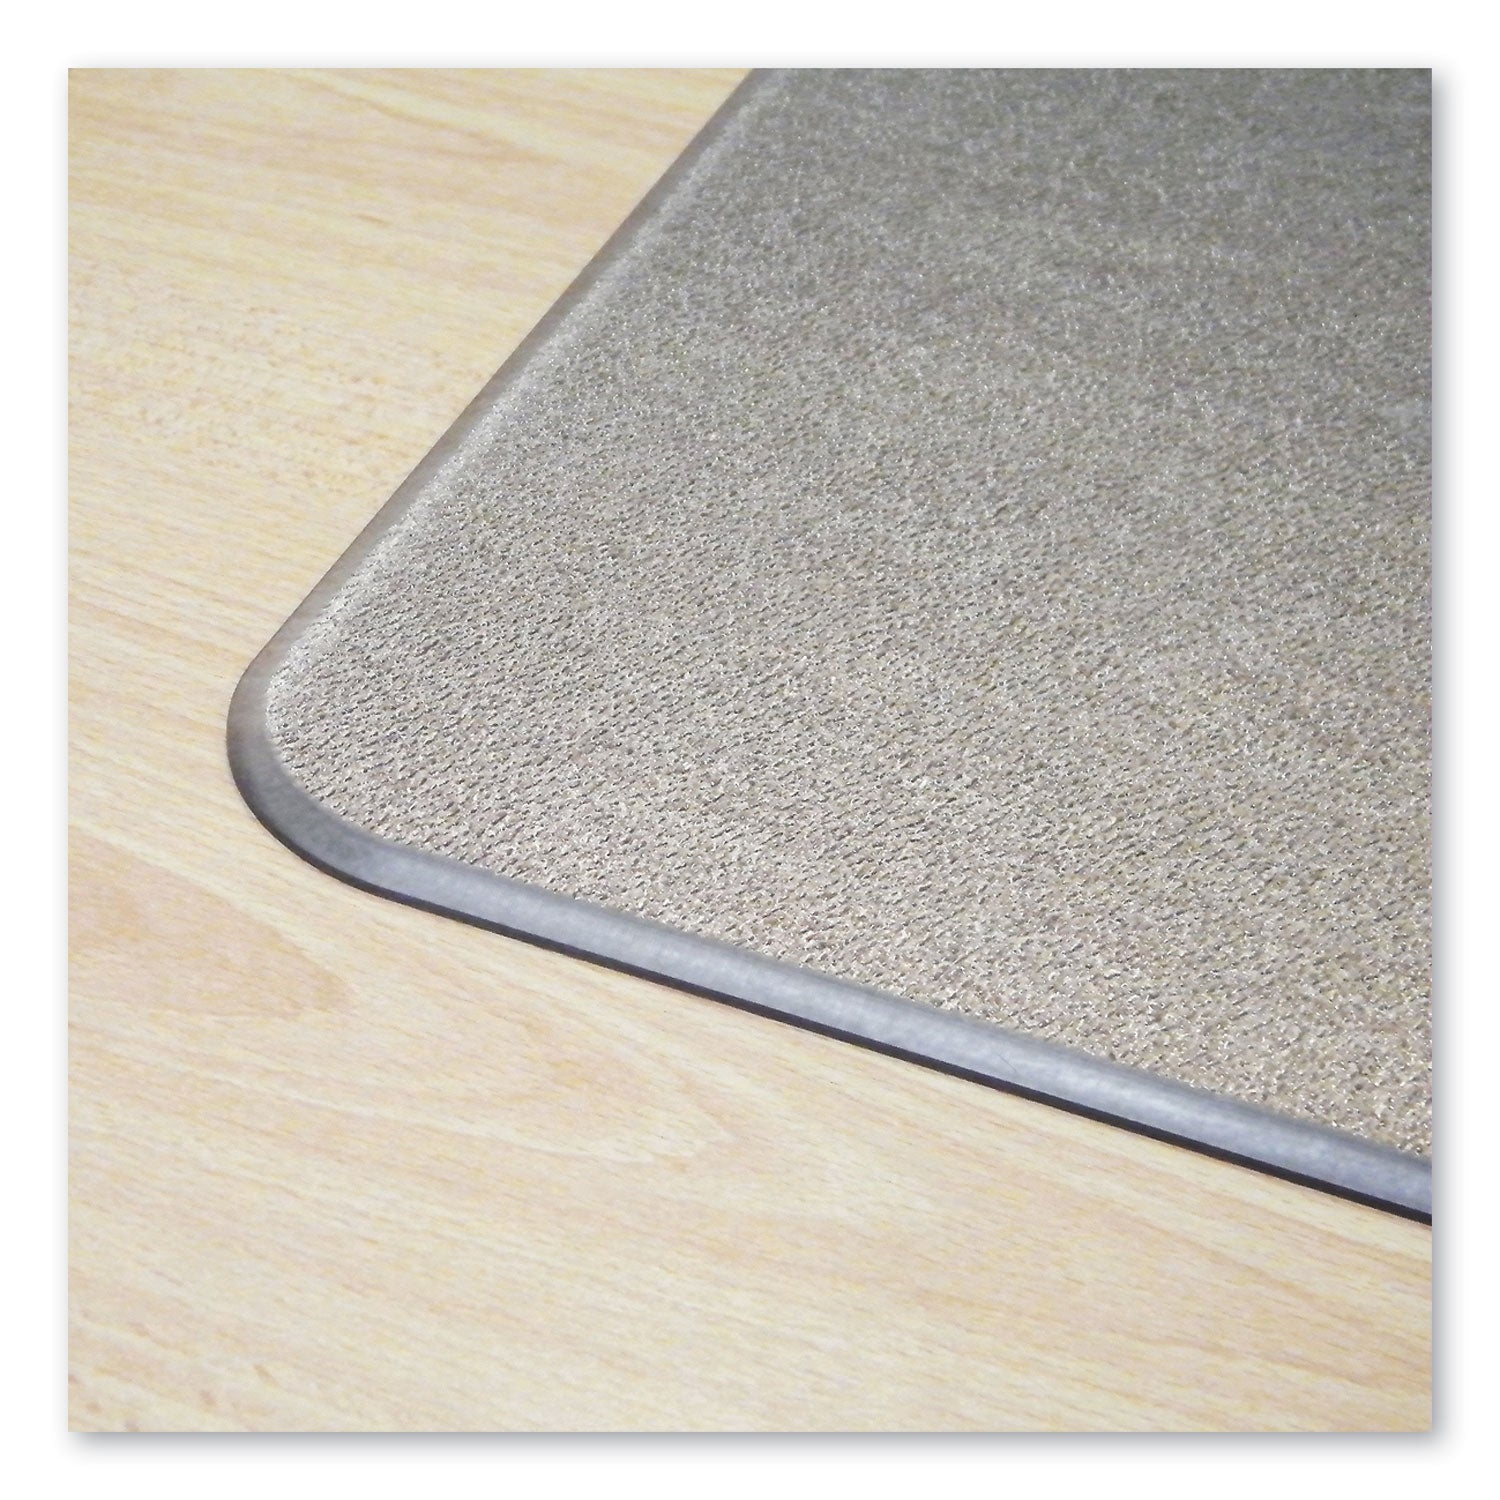 cleartex-megamat-heavy-duty-polycarbonate-mat-for-hard-floor-all-carpet-46-x-53-clear_flrecm121345er - 8